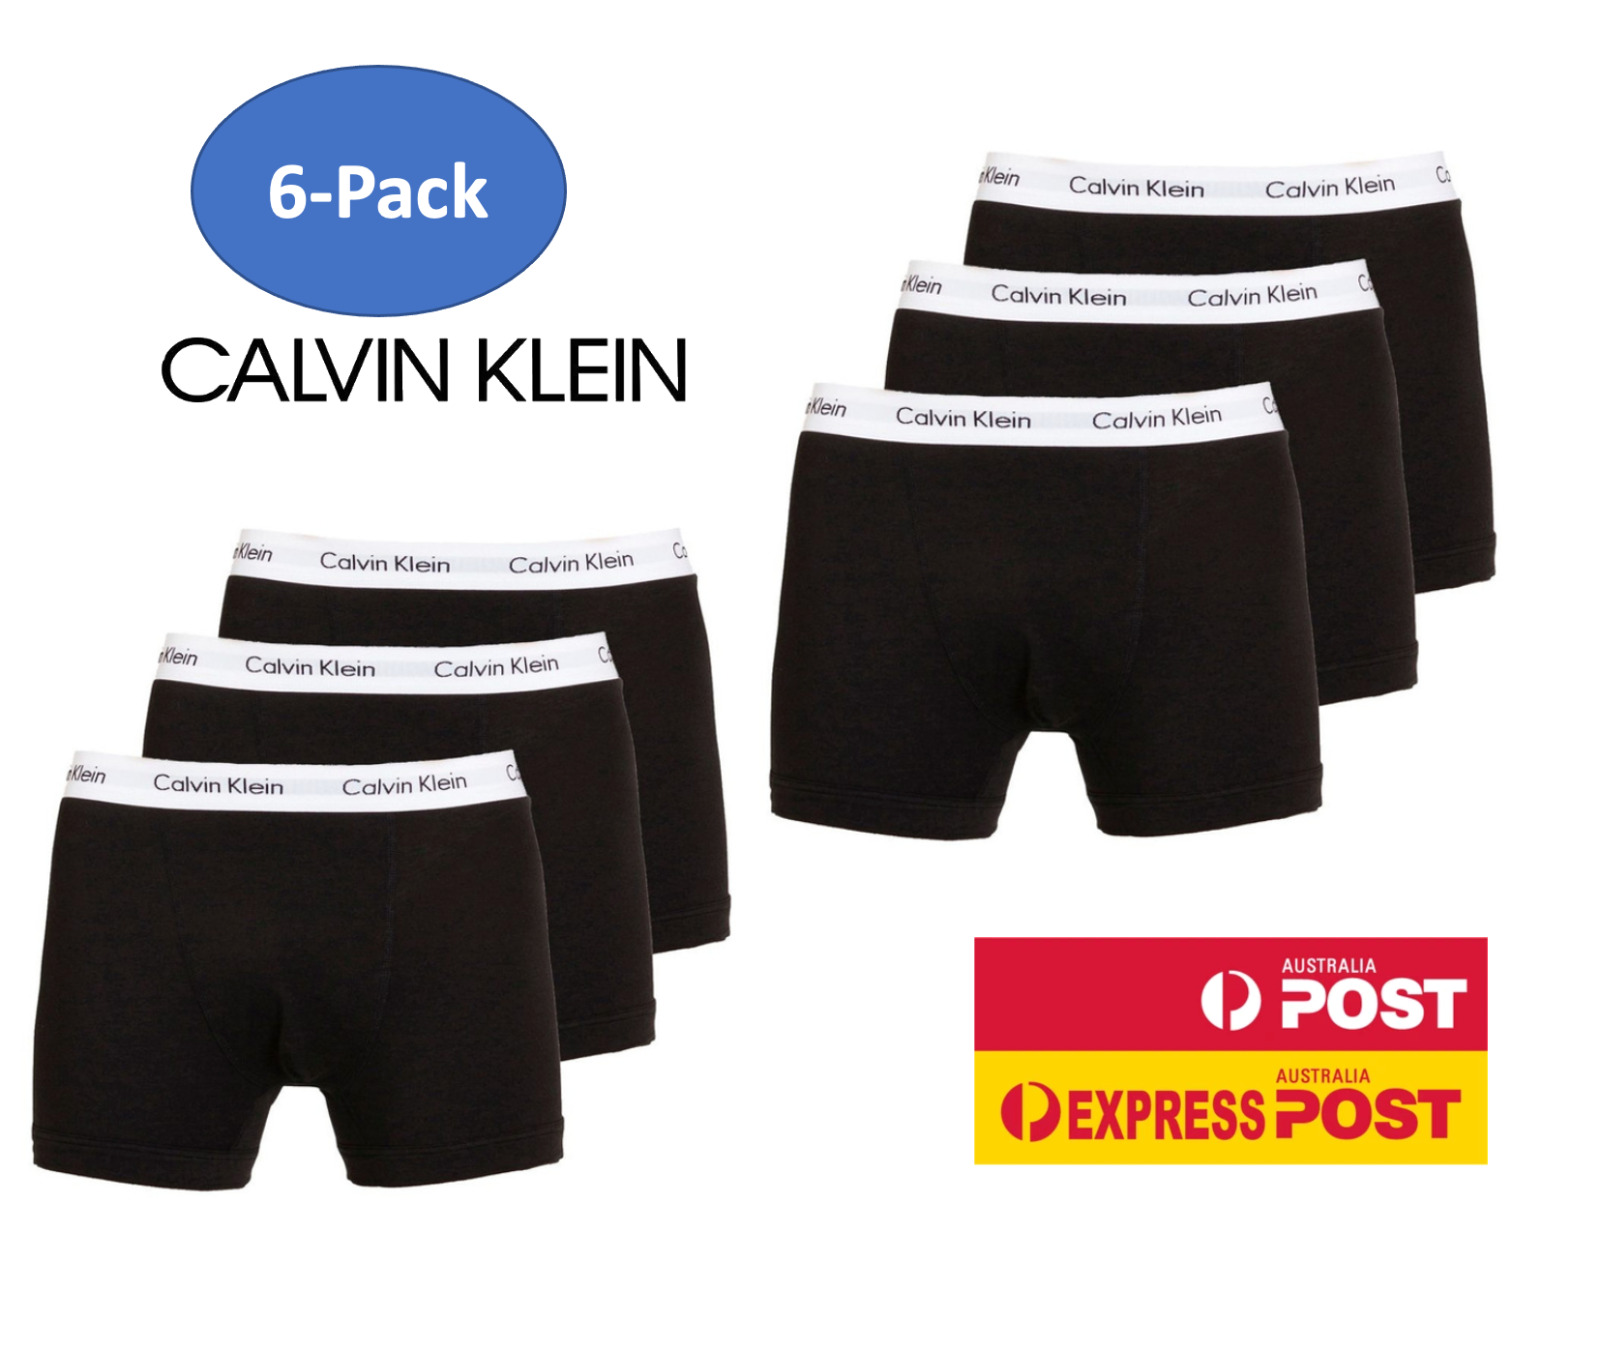 CALVIN KLEIN CK Men's Comfort Fit Trunk Underwear New Black - S M L XL - 6-Pack